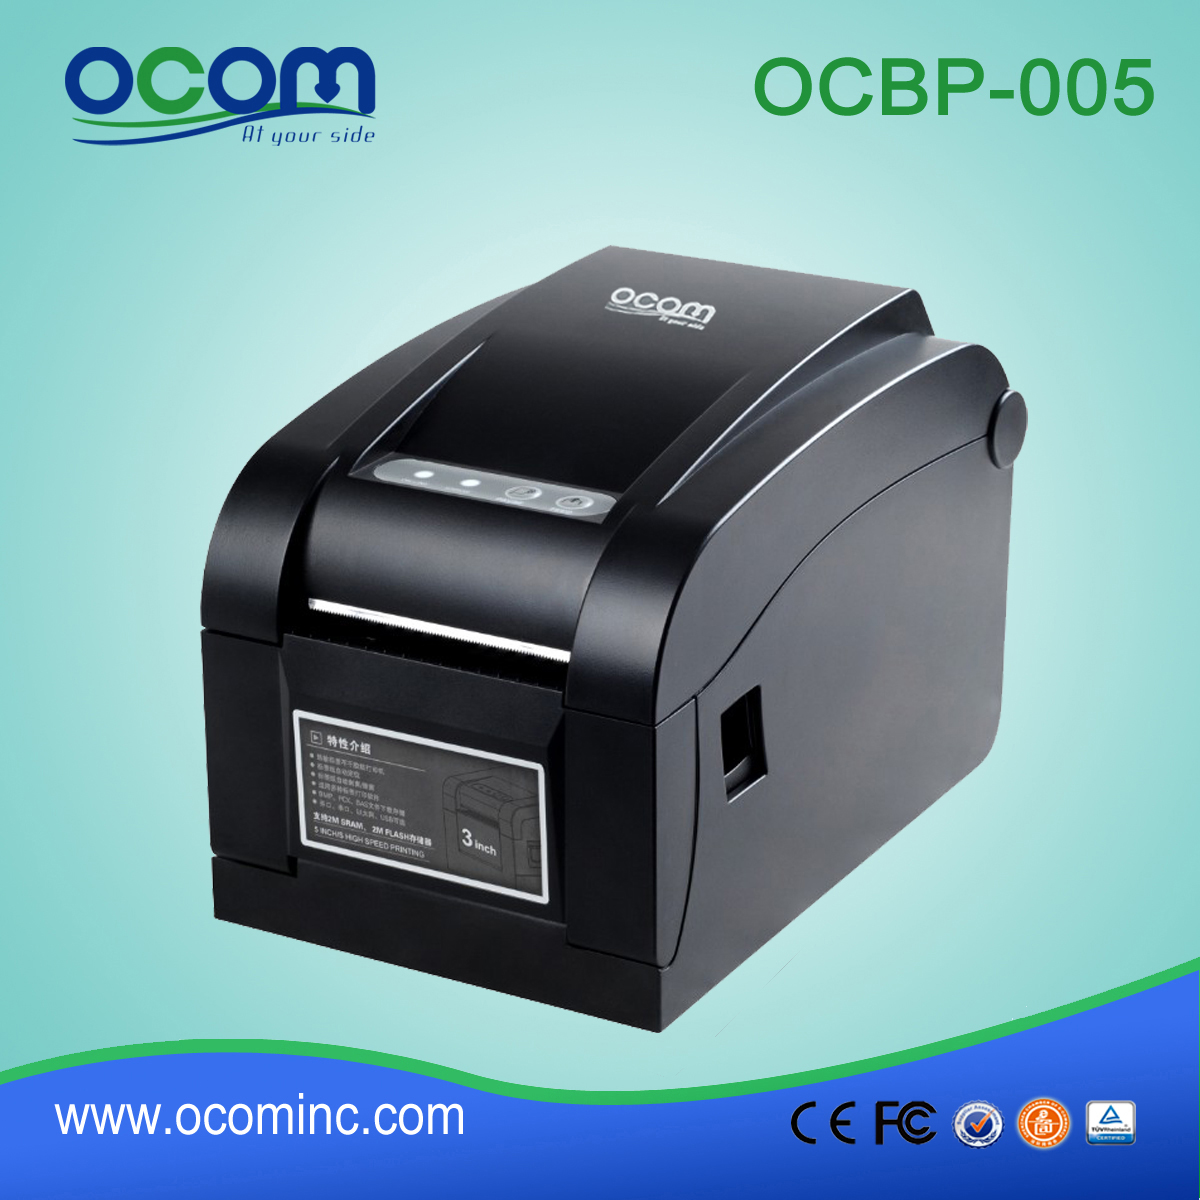 OCBP -005-URL 3inch Width Paper Thermal Barcode Label Printer с функцией отслаивания